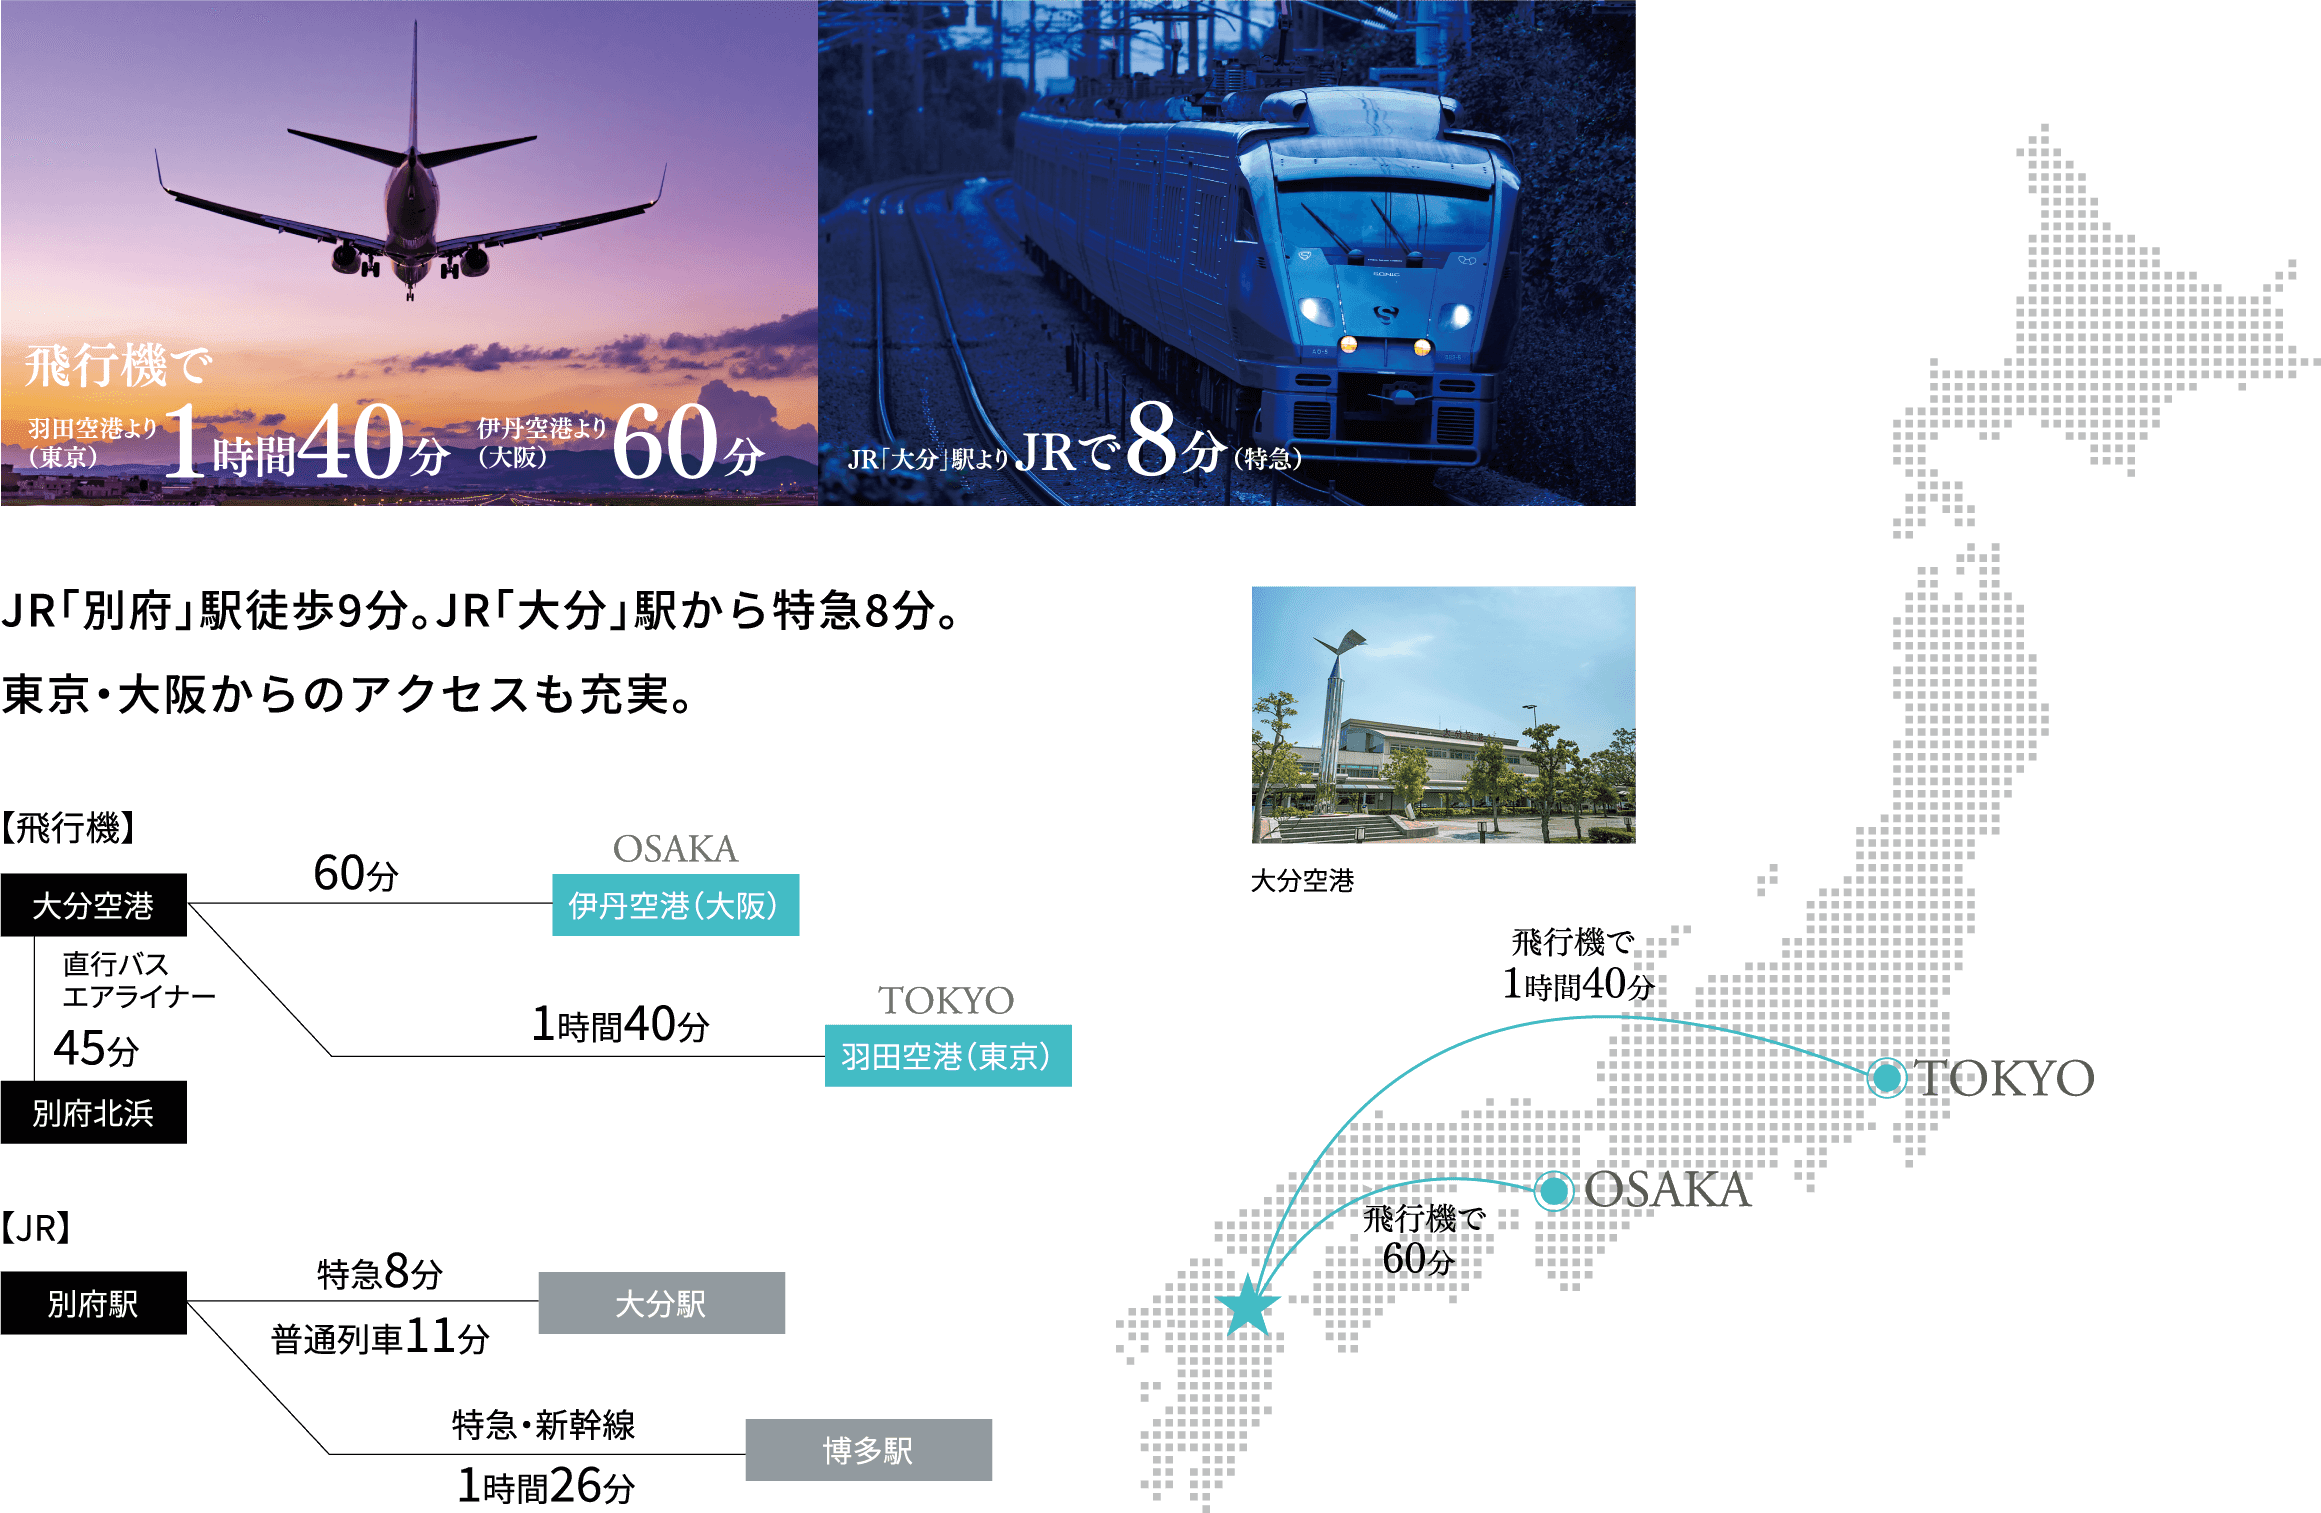 JR「別府」駅徒歩9分。JR「大分」駅から特急8分。東京･大阪からのアクセスも充実。